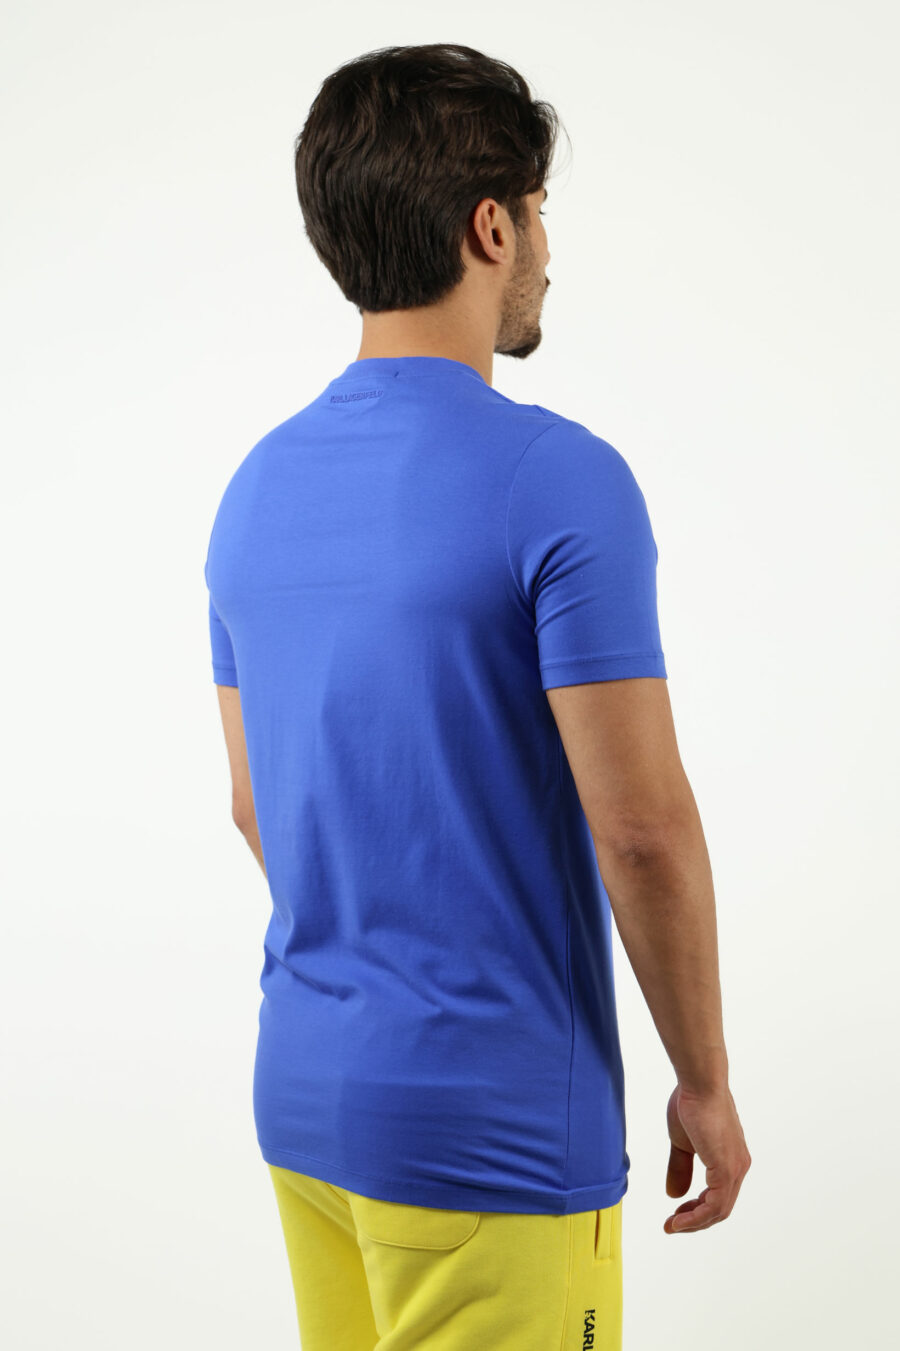 Camiseta azul eléctrico con minilogo "karl" en goma - number13980